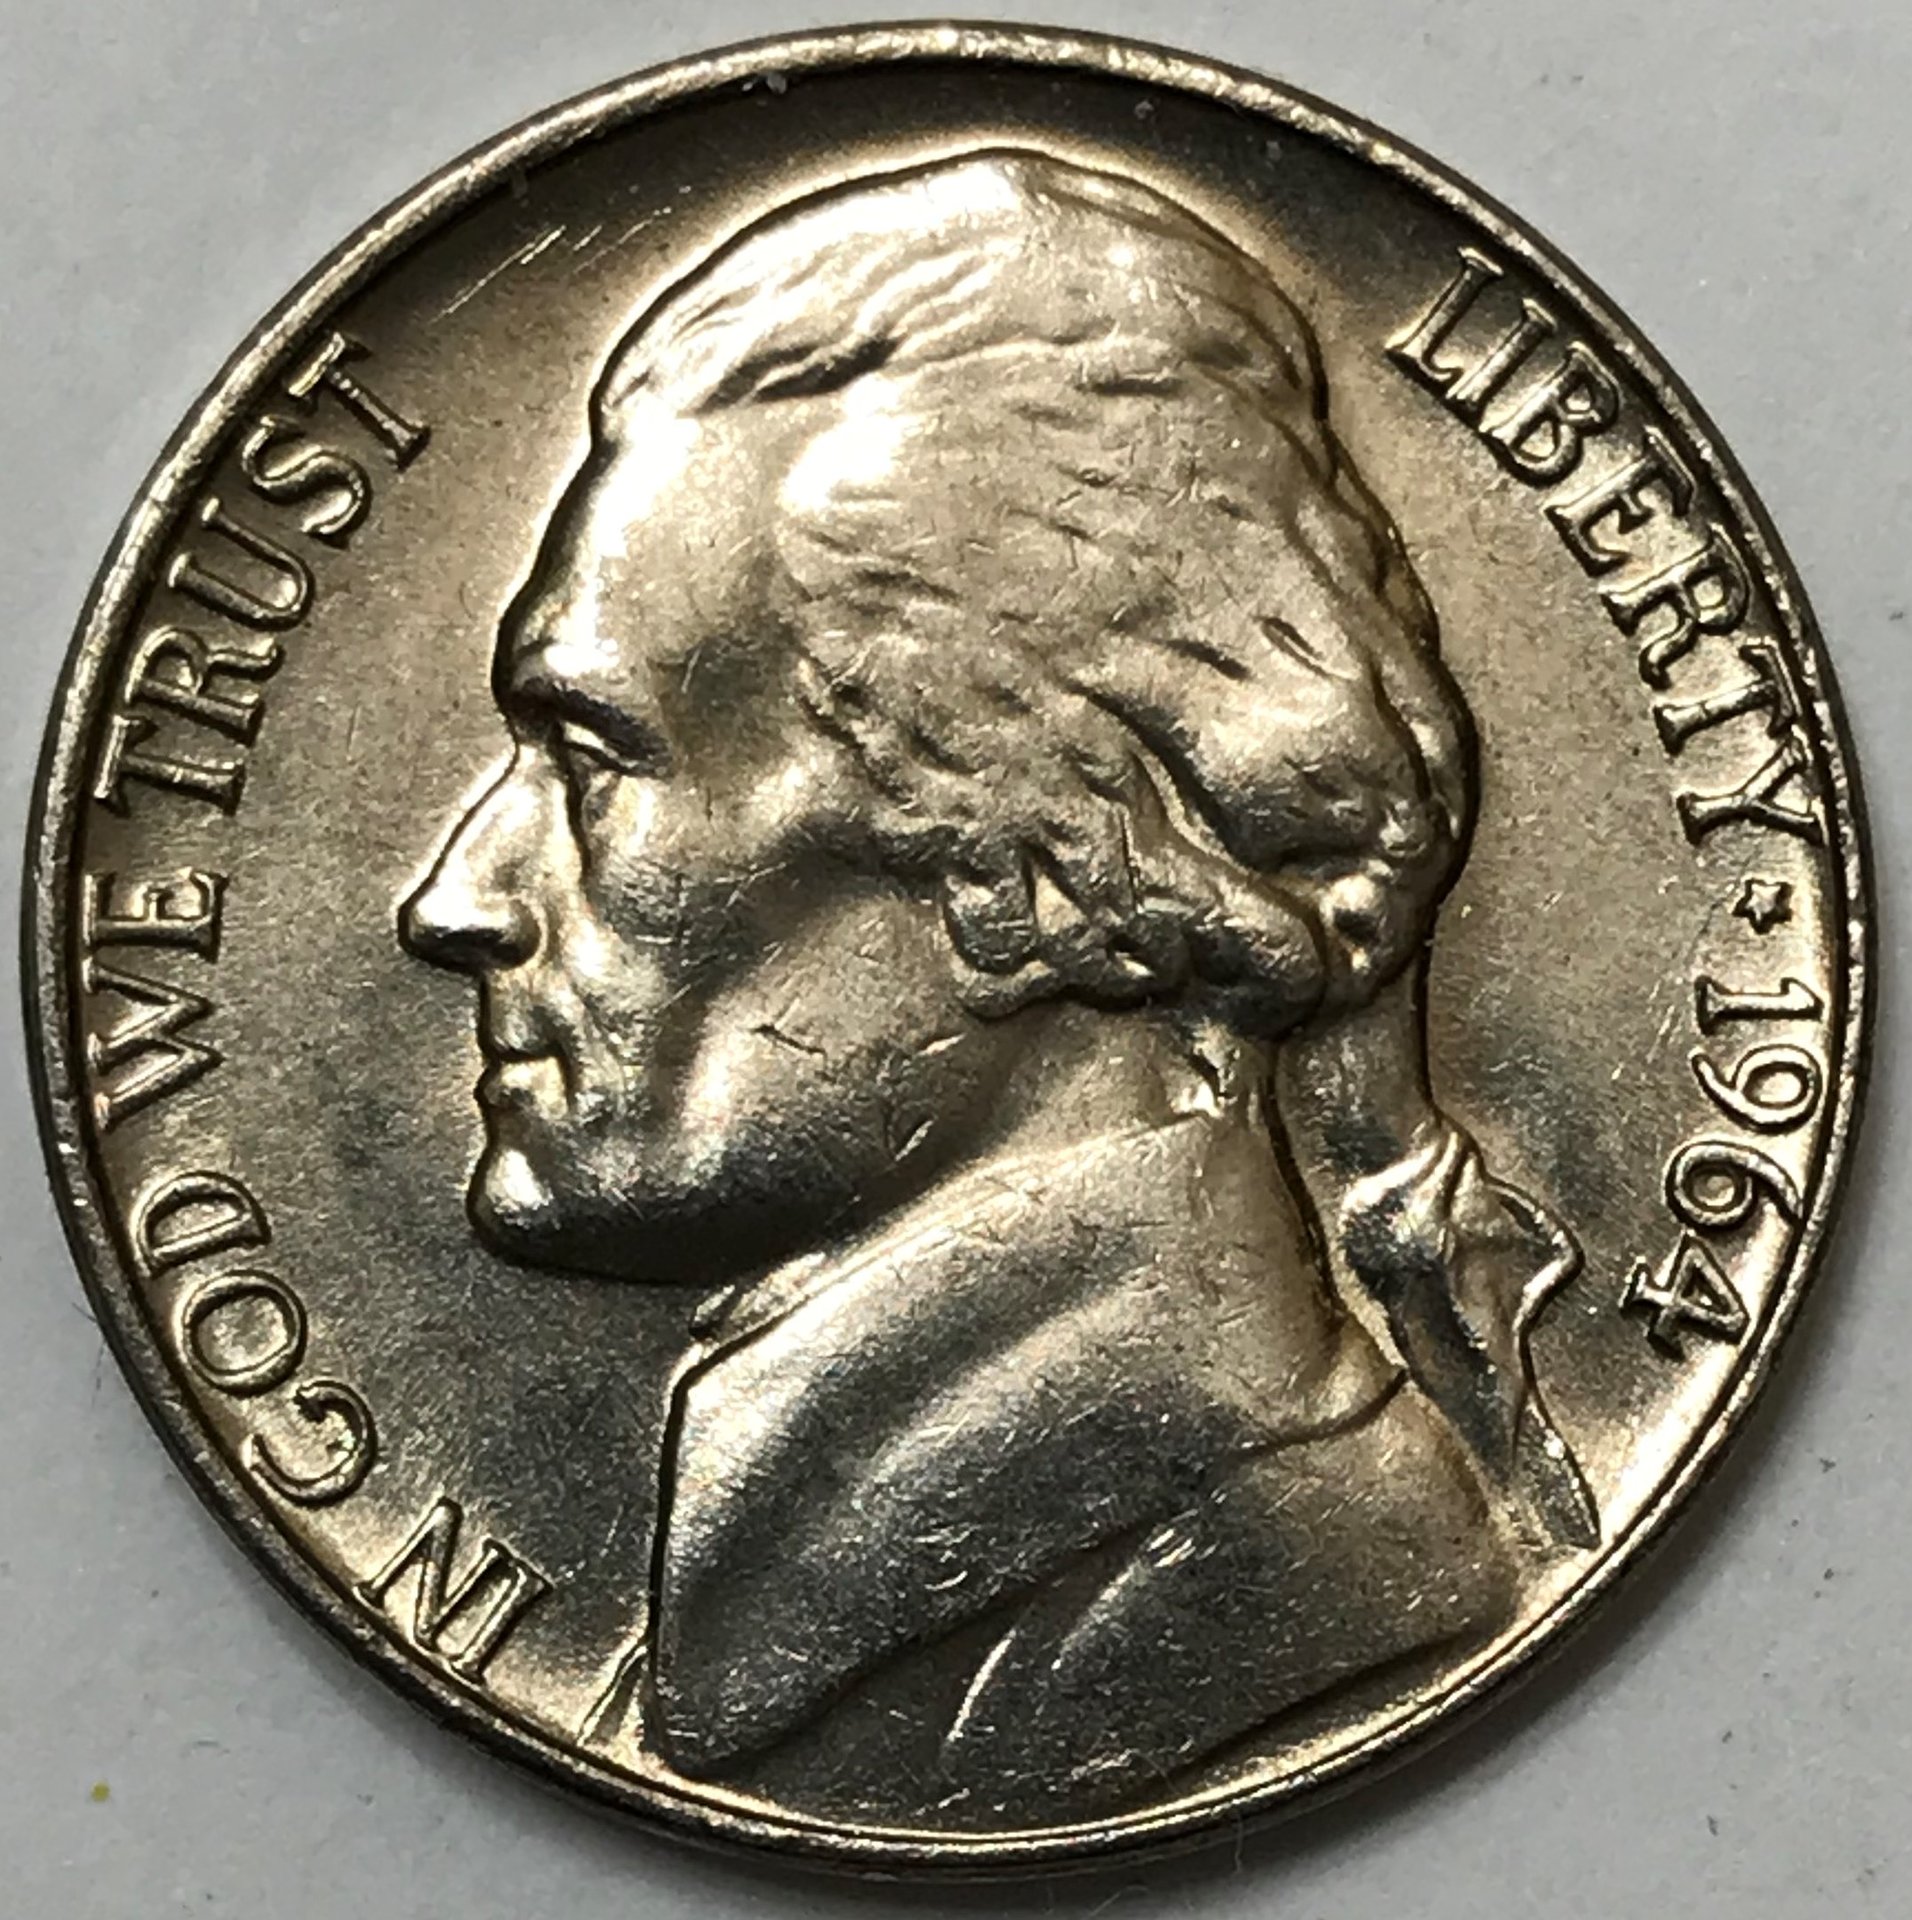 1964 Jefferson Nickel - Obv pocket change.JPG